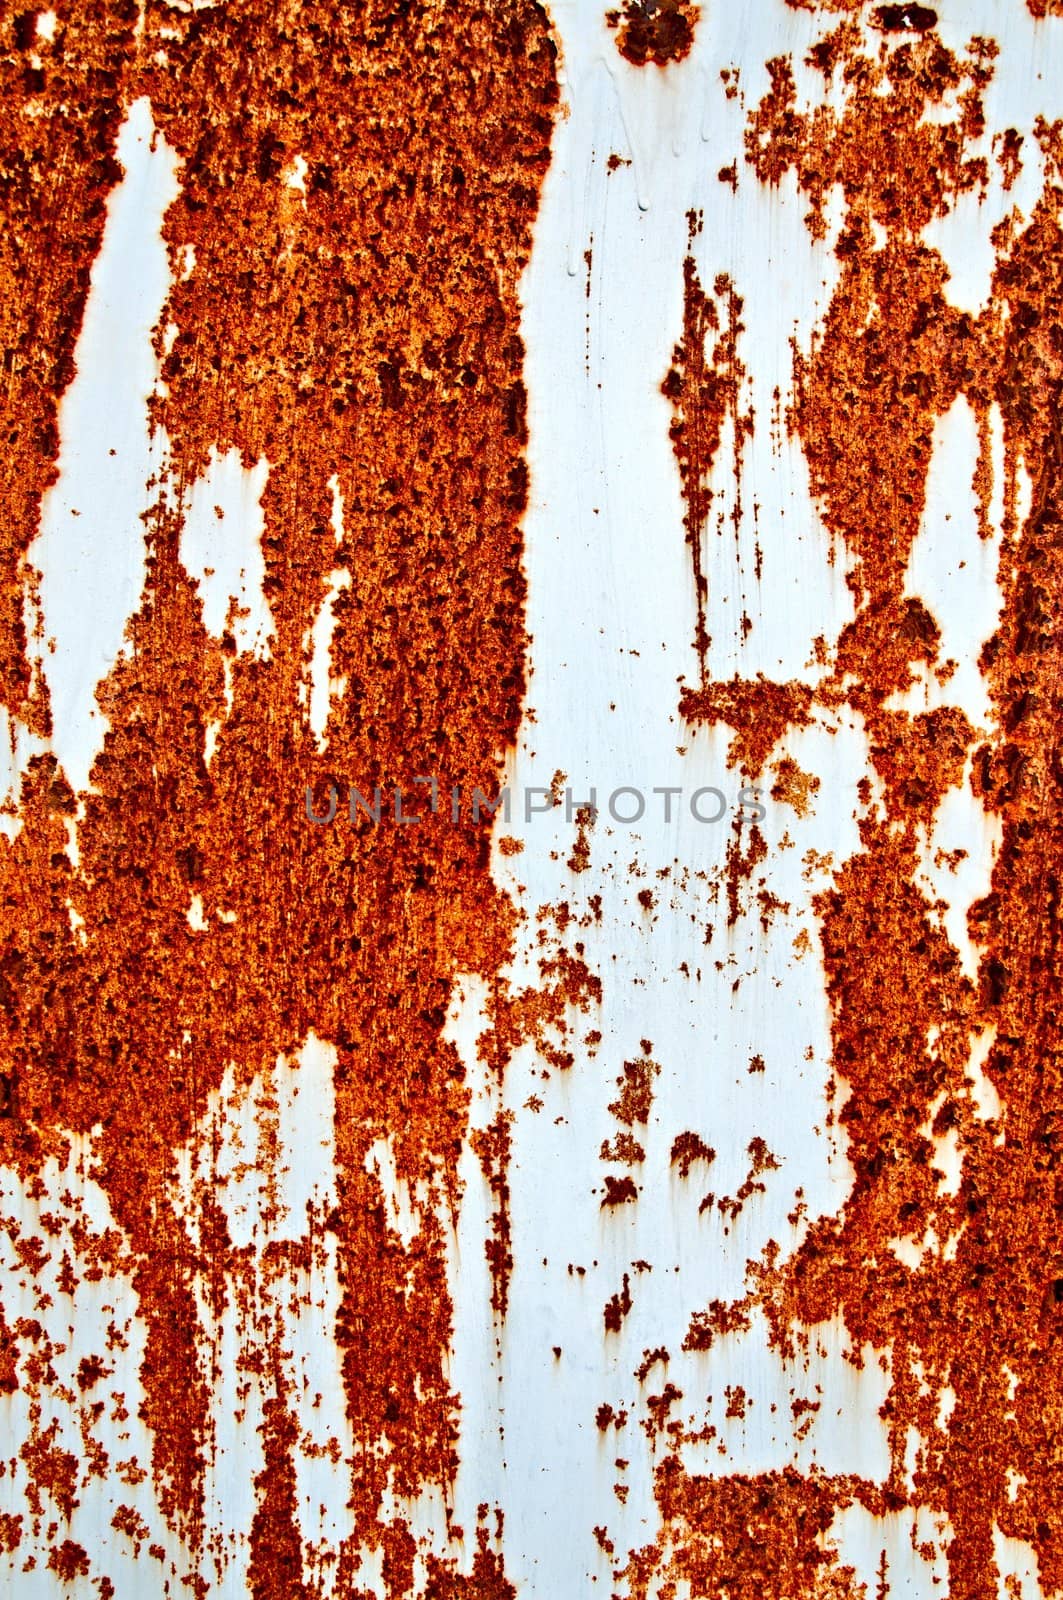 Dirty Rusty Background by benjaminlion